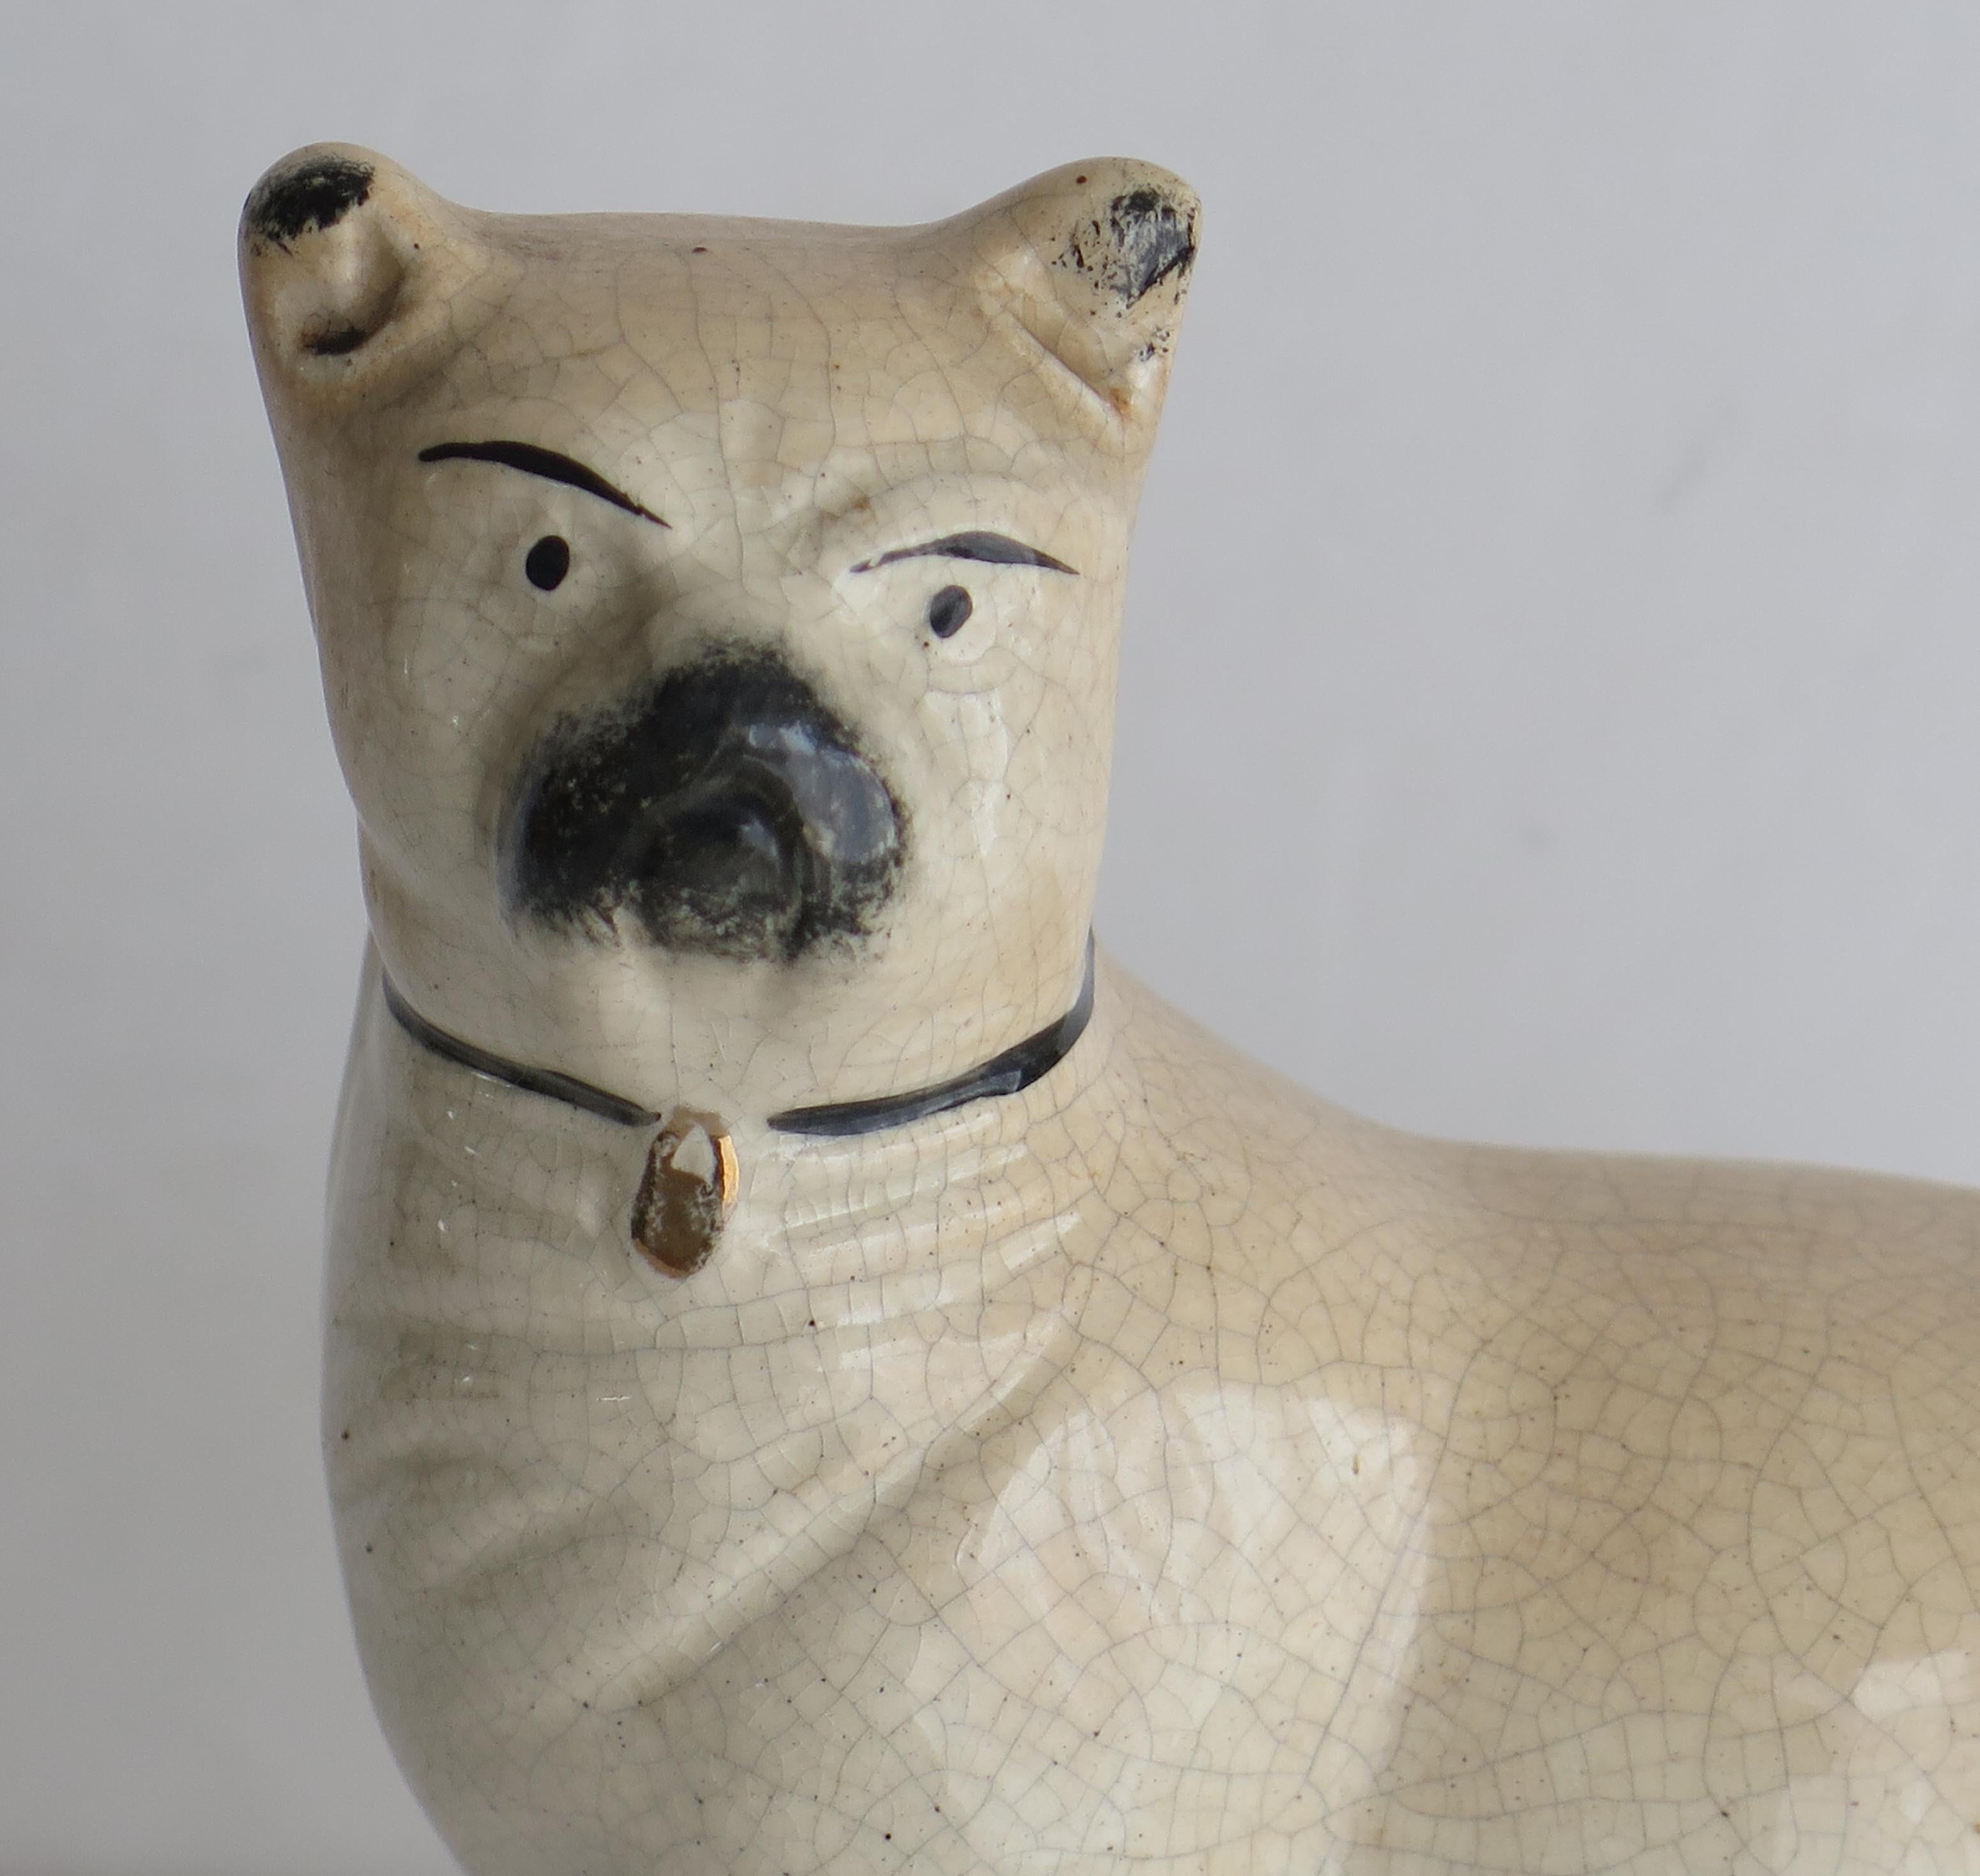 Glazed Mid 19th Century Pug Dog Figurine Staffordshire Pottery, English